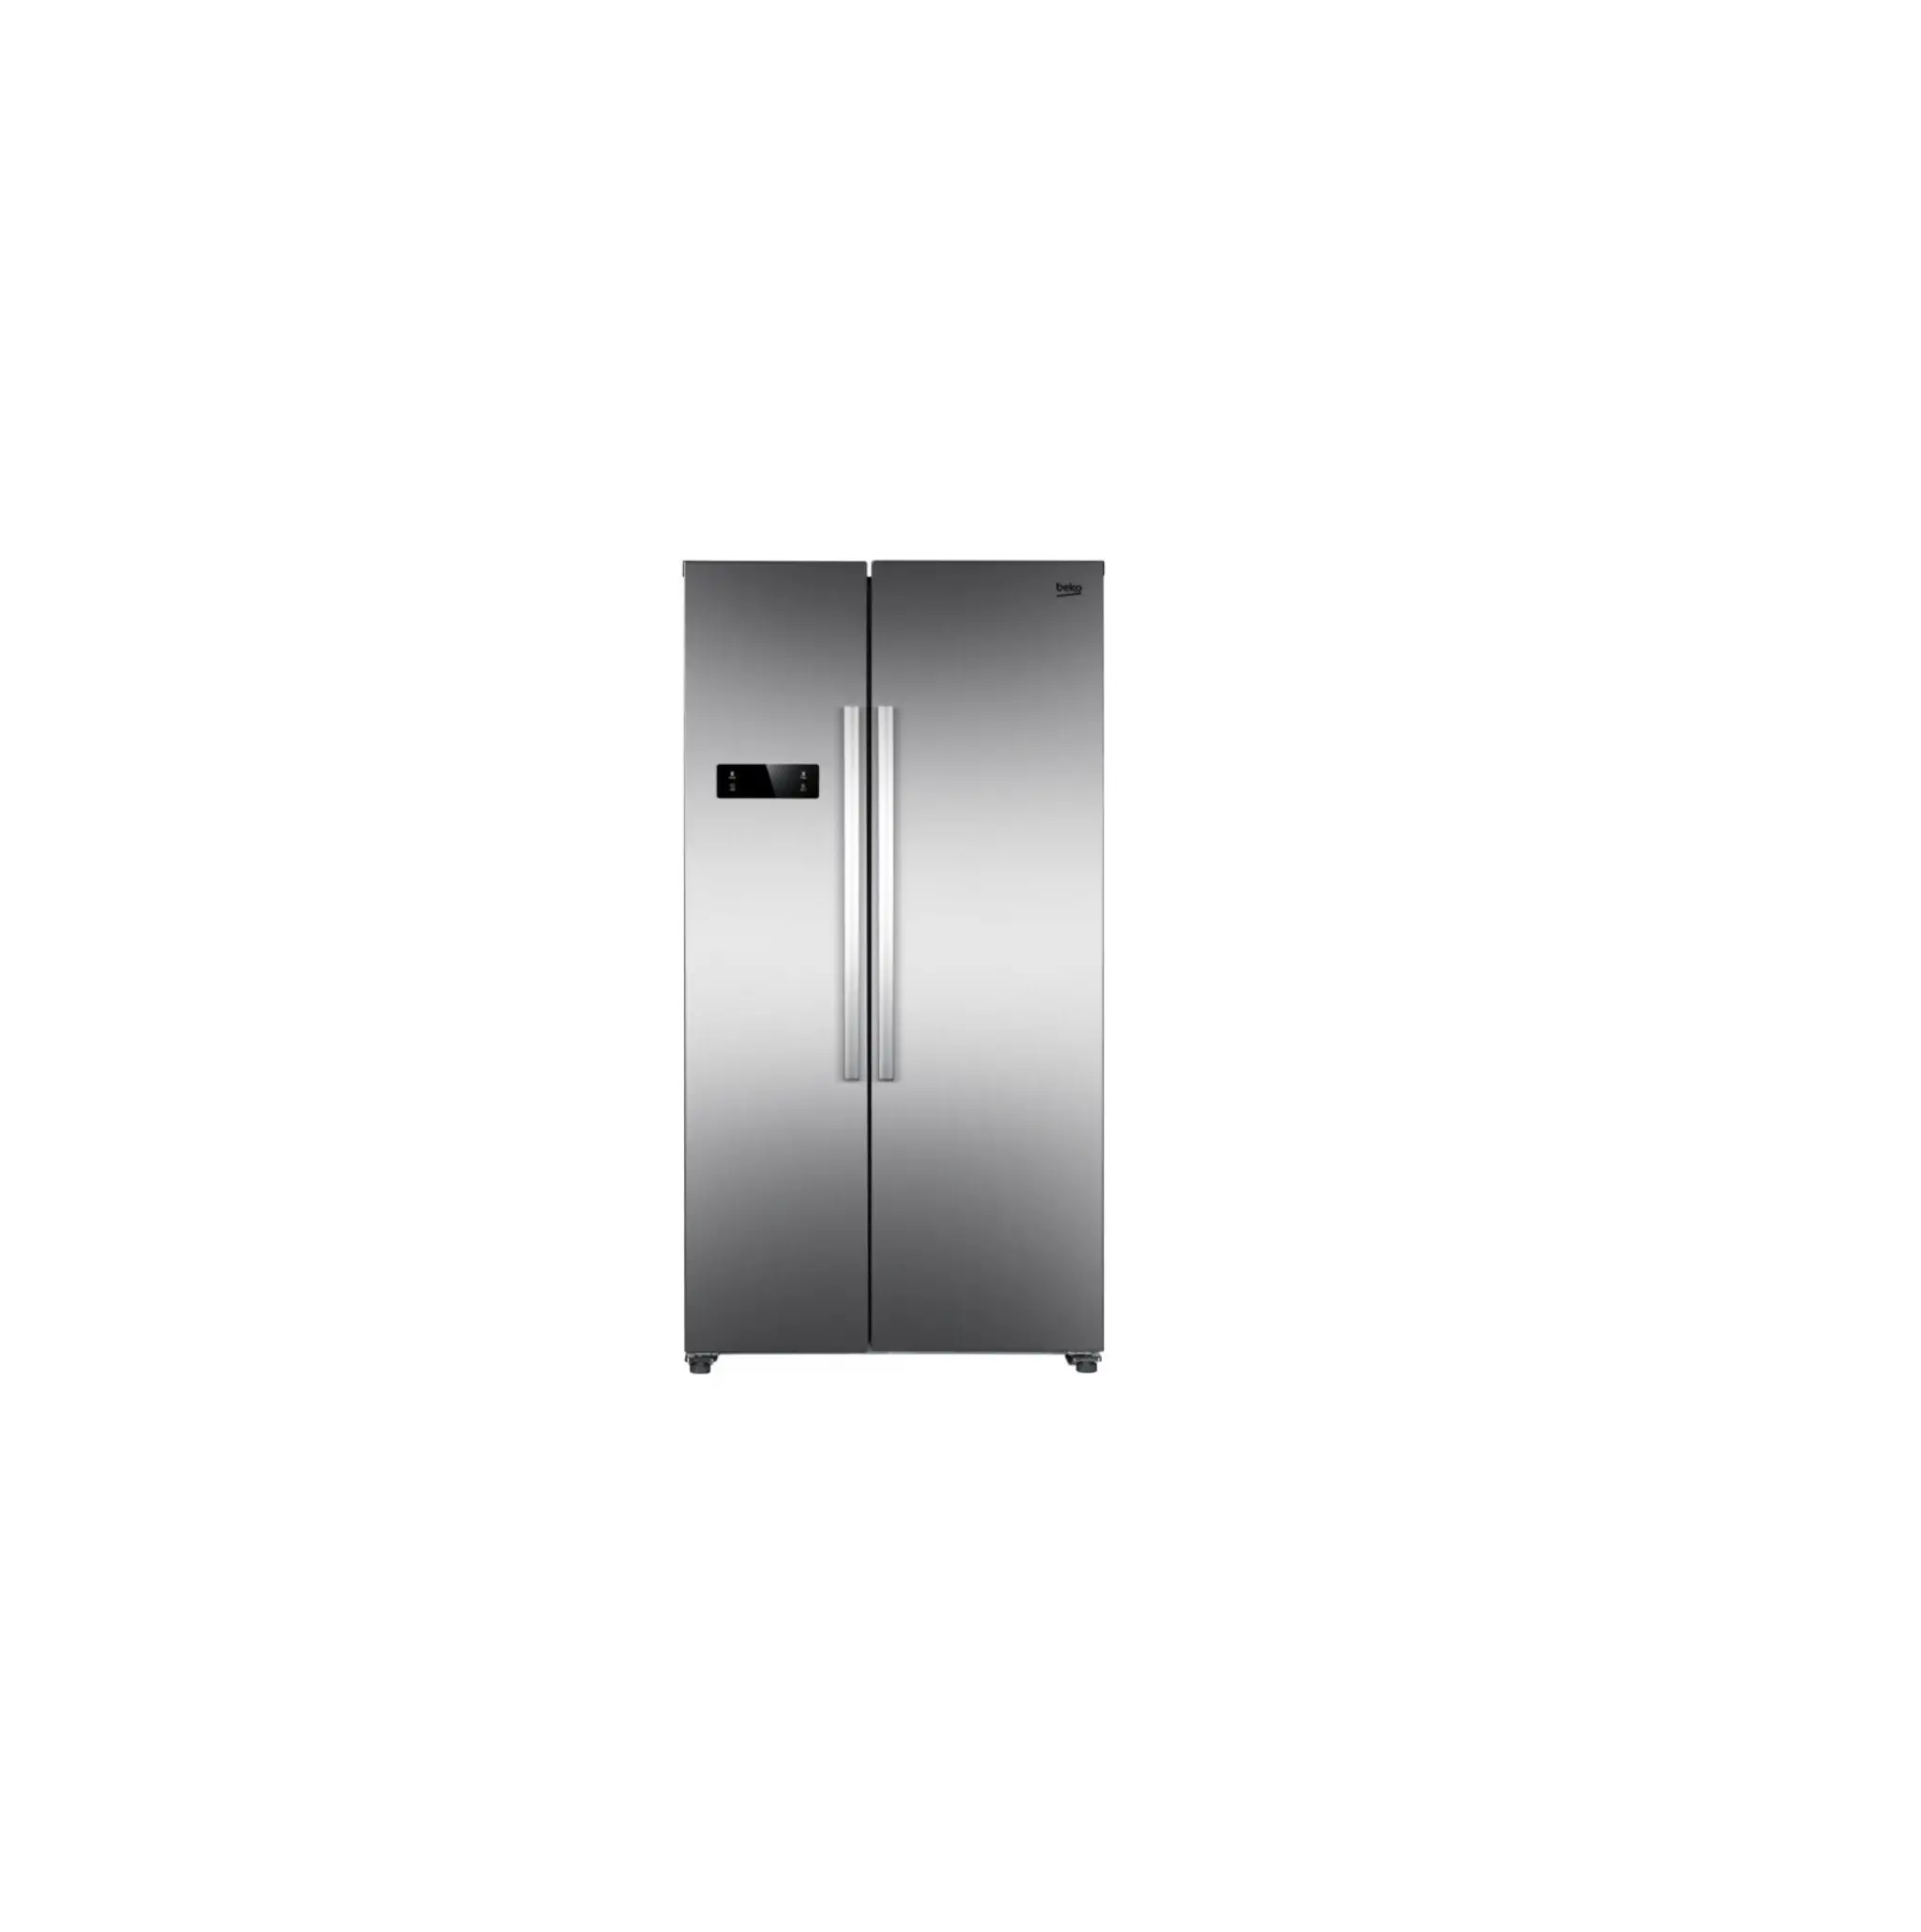 GNO, SBS Series Refrigerator